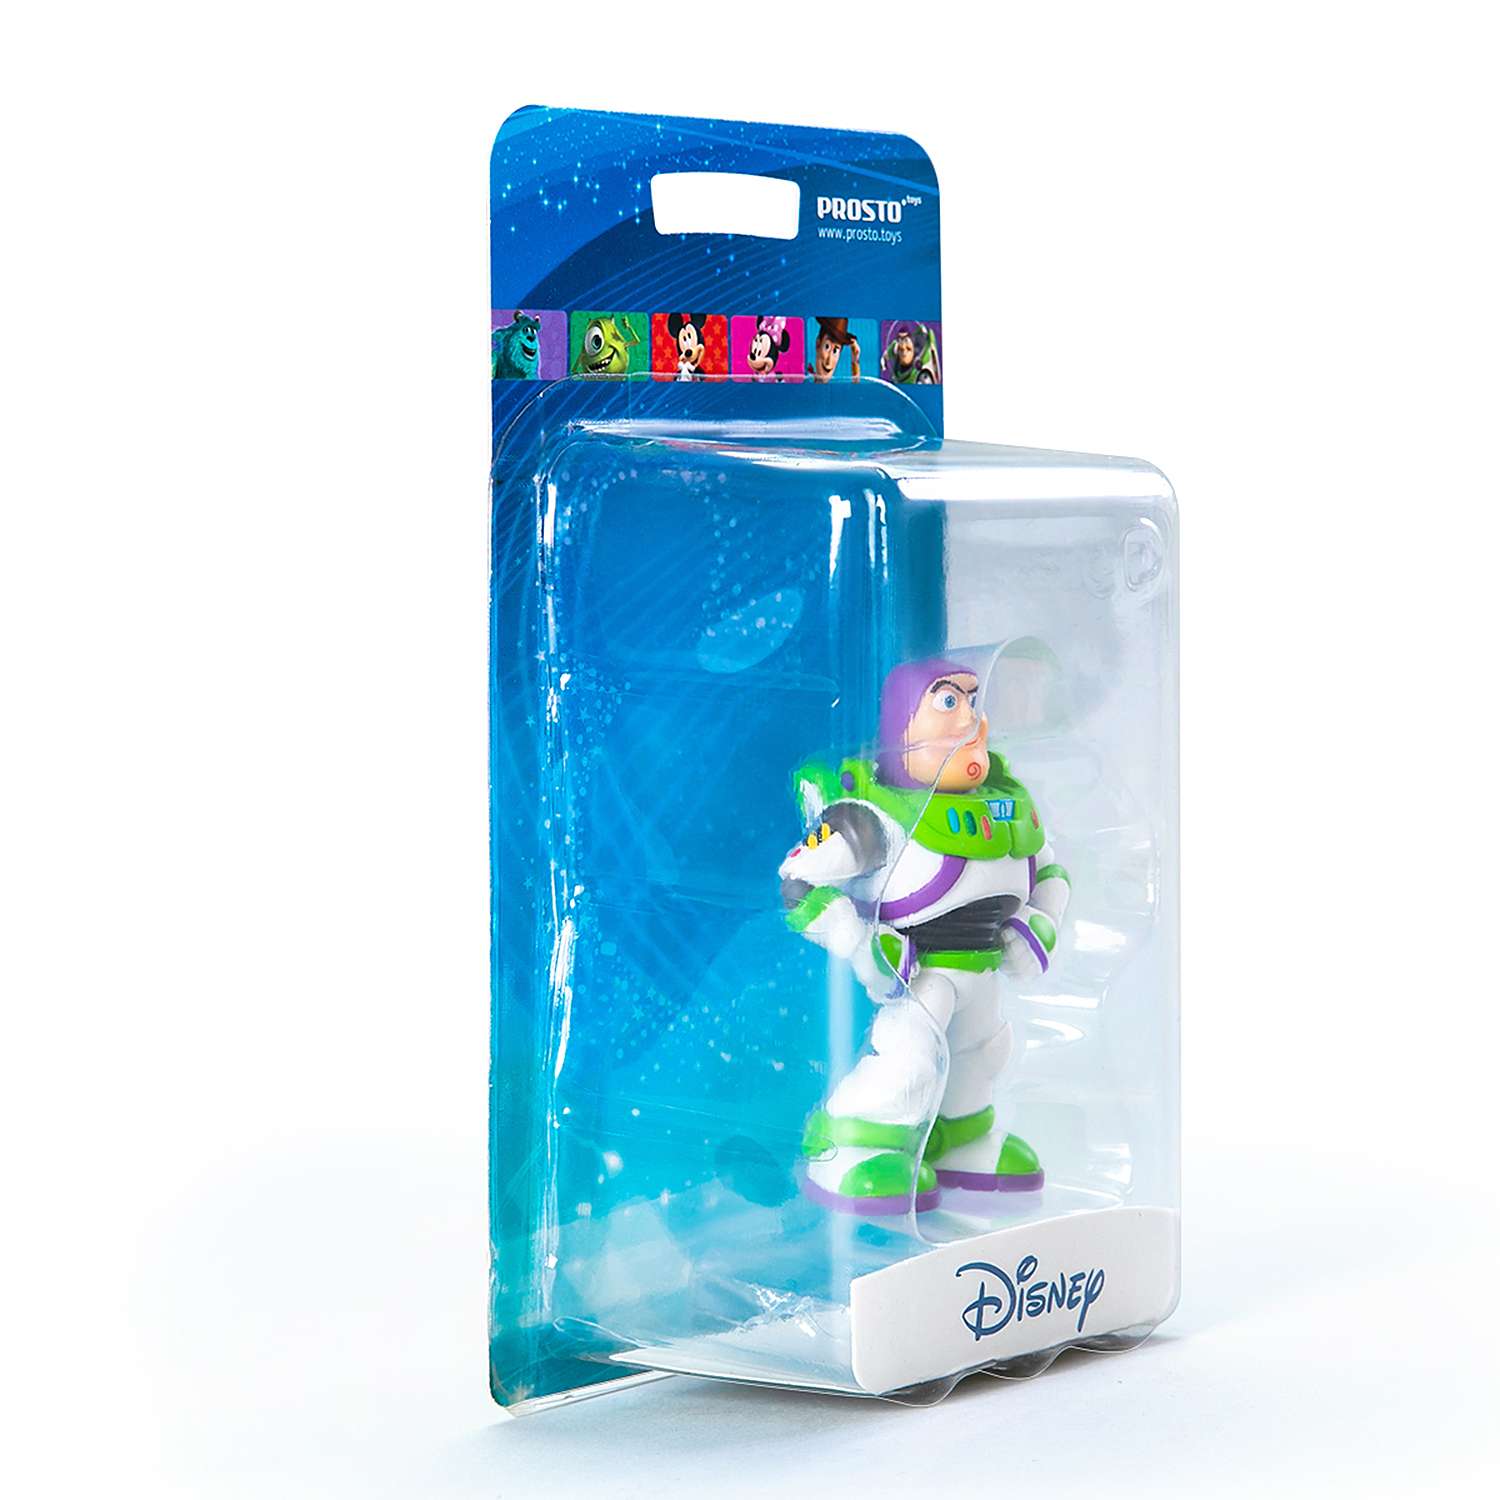 Игрушка Prosto toys Базз Лайтер P06-Pixar 492006 - фото 3